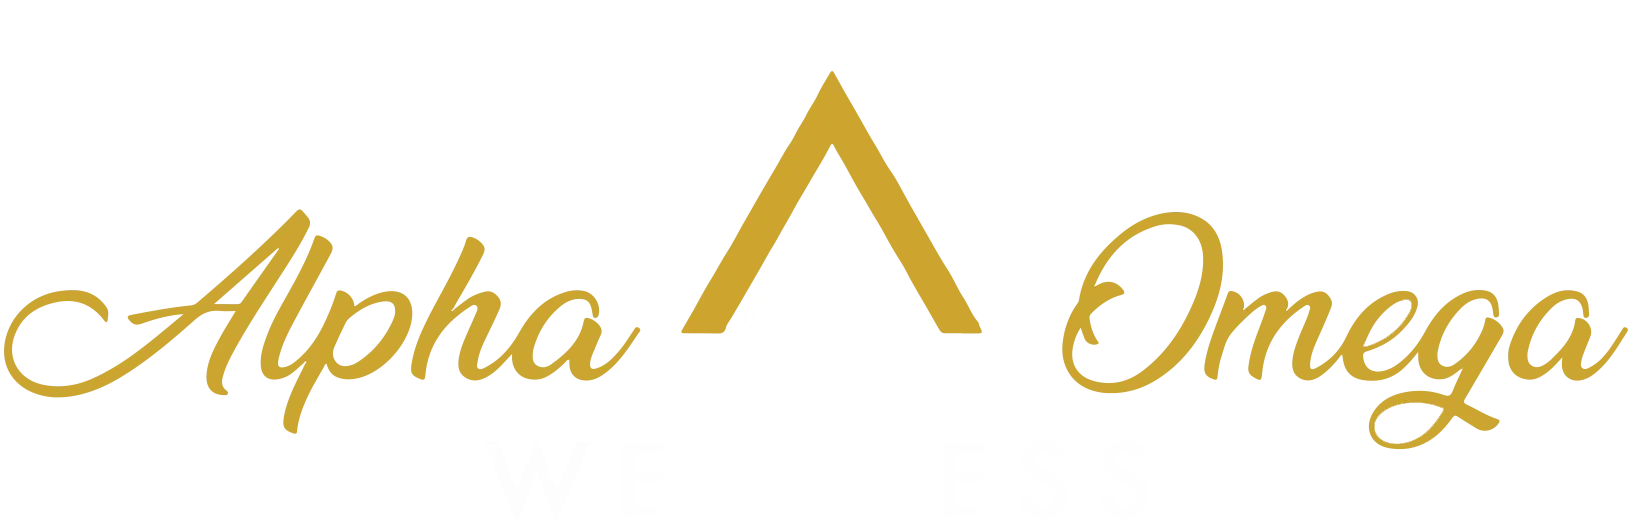 Alpha Omega Wellness logo